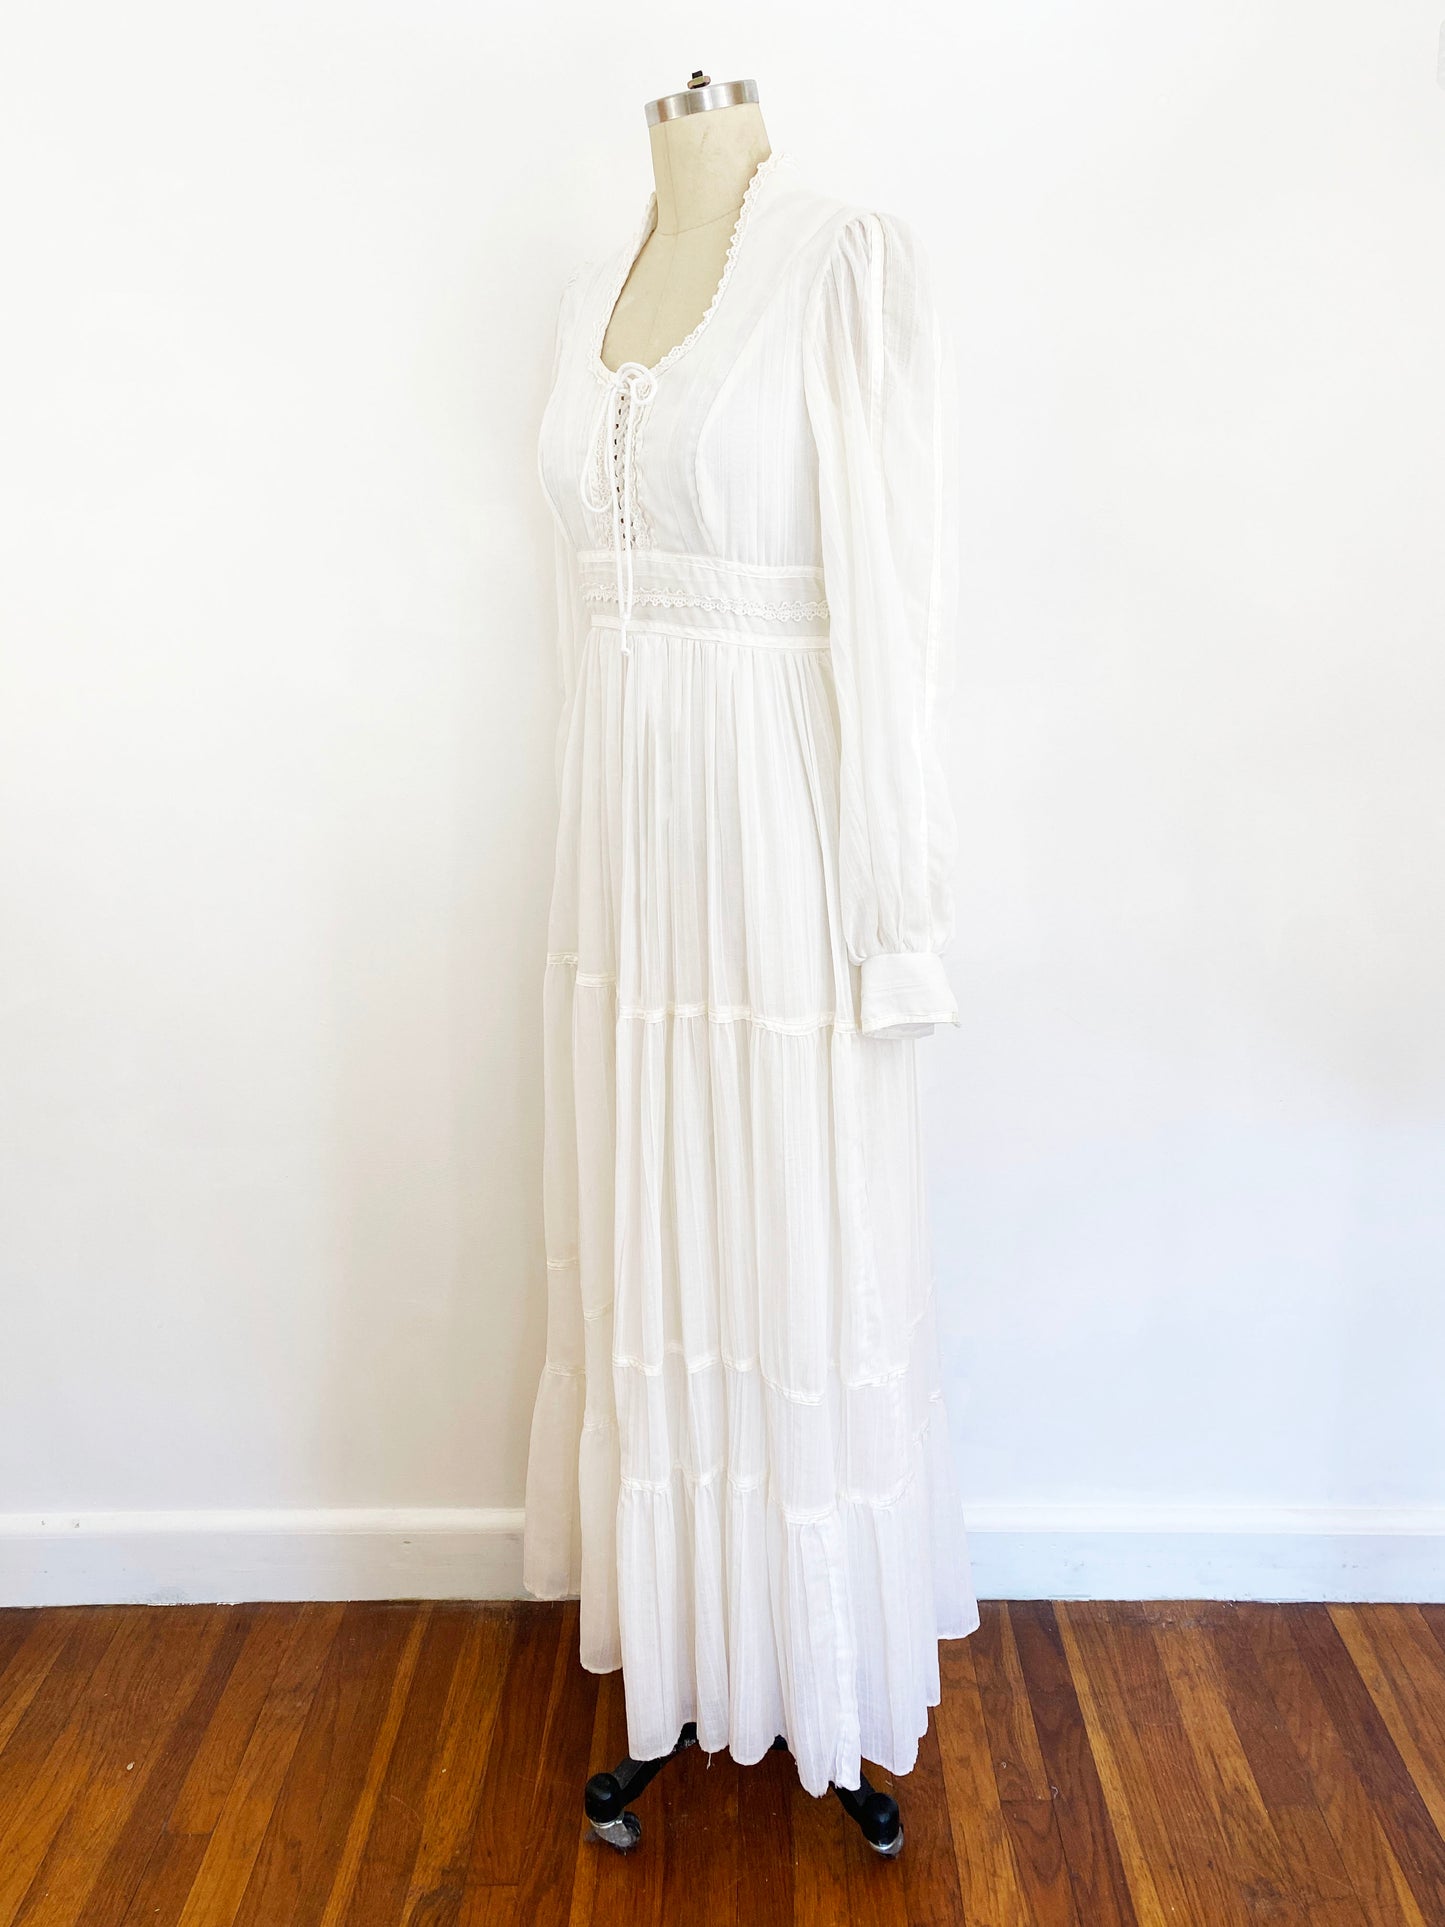 1970-1980s Gunne Sax White Gauzy Lace Corset Dress Renaissance Prairie Maxi Dress Boho Hippie Cottagecore Romantic / Small 6